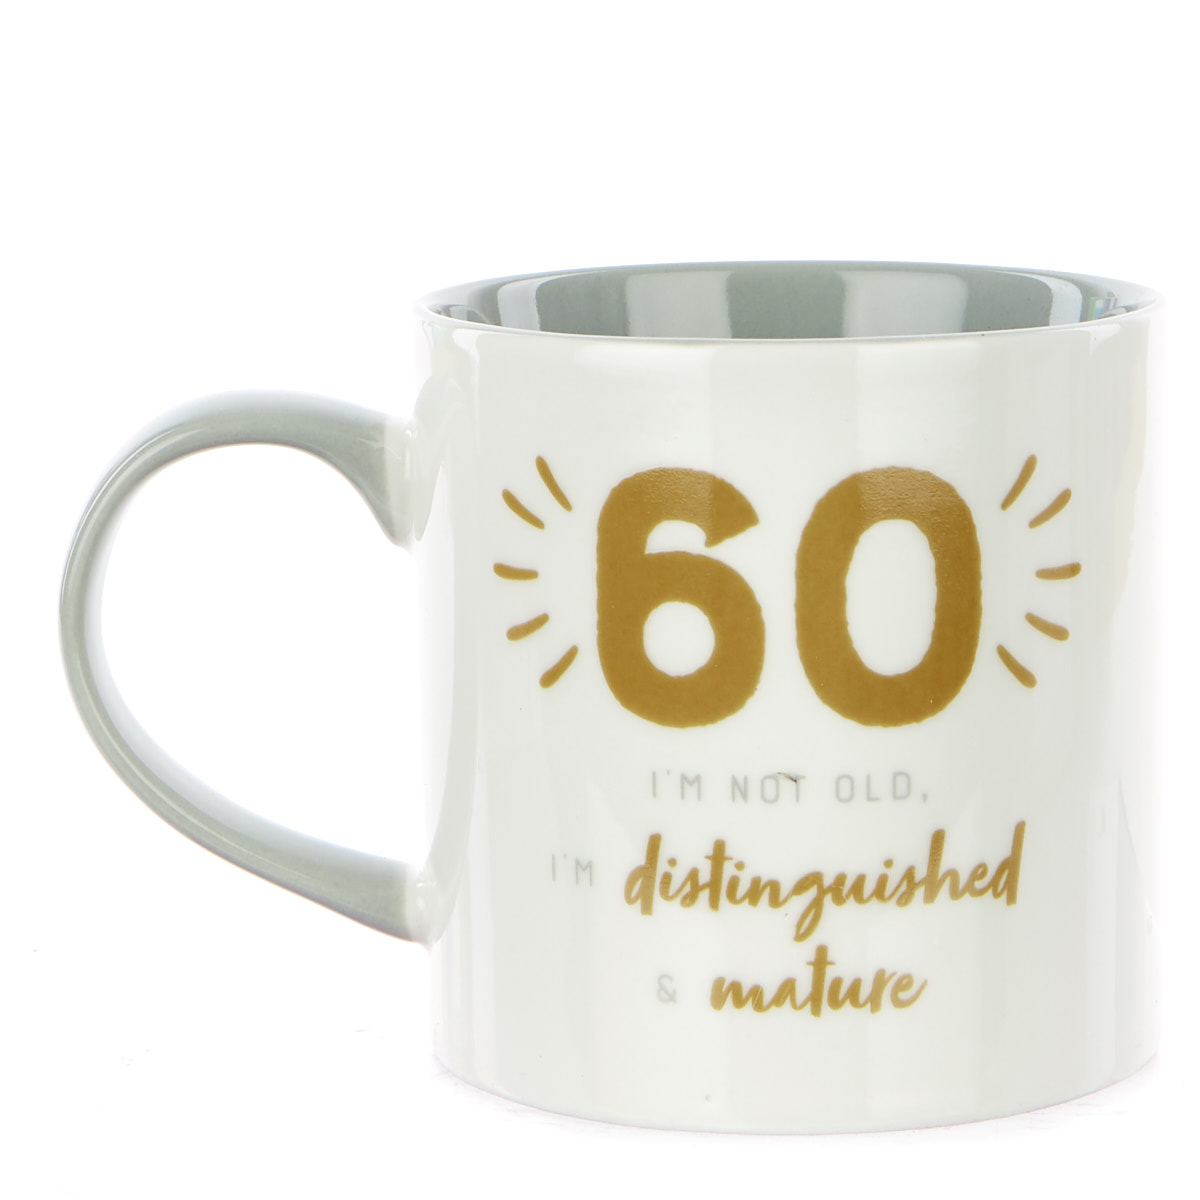 60th Birthday Mug - Distinguished & Mature